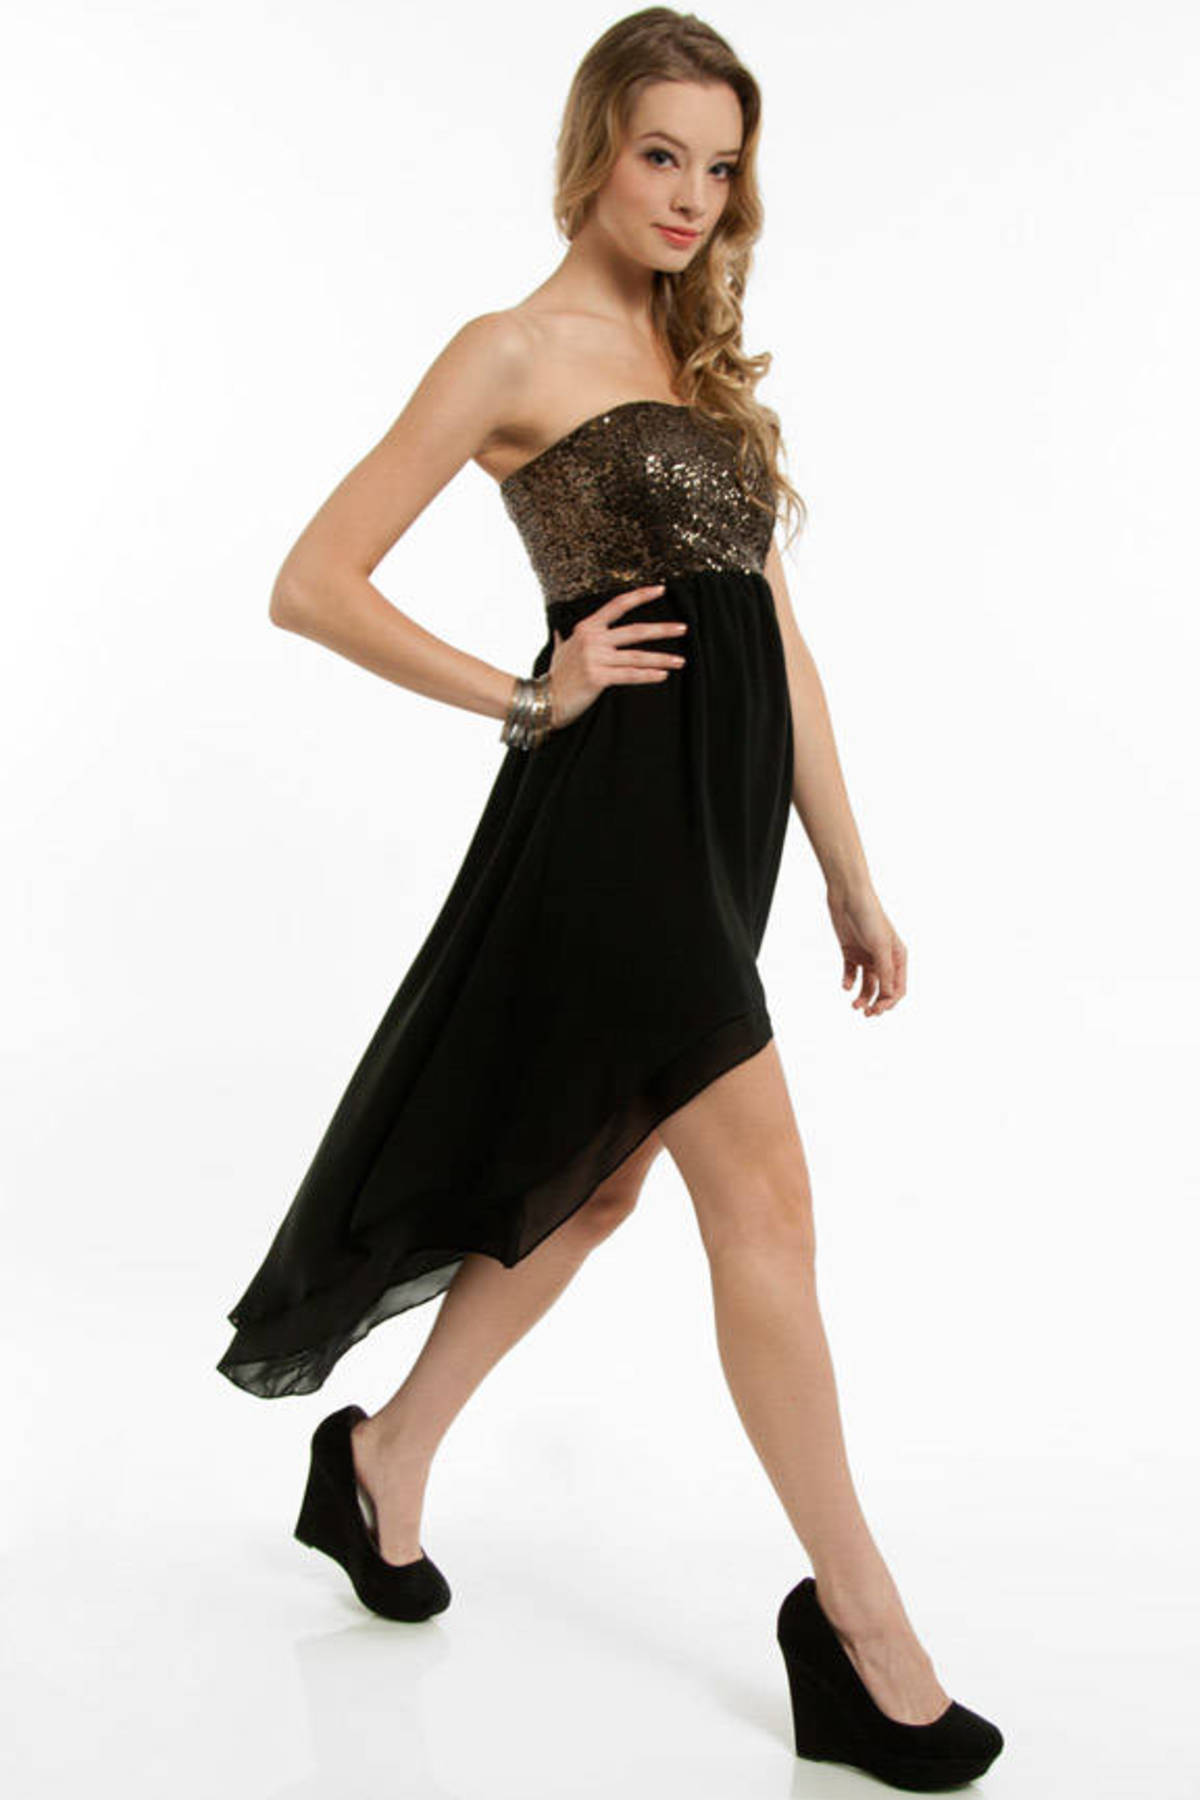 Glimmer Strapless Dress in Black - $25 | Tobi US